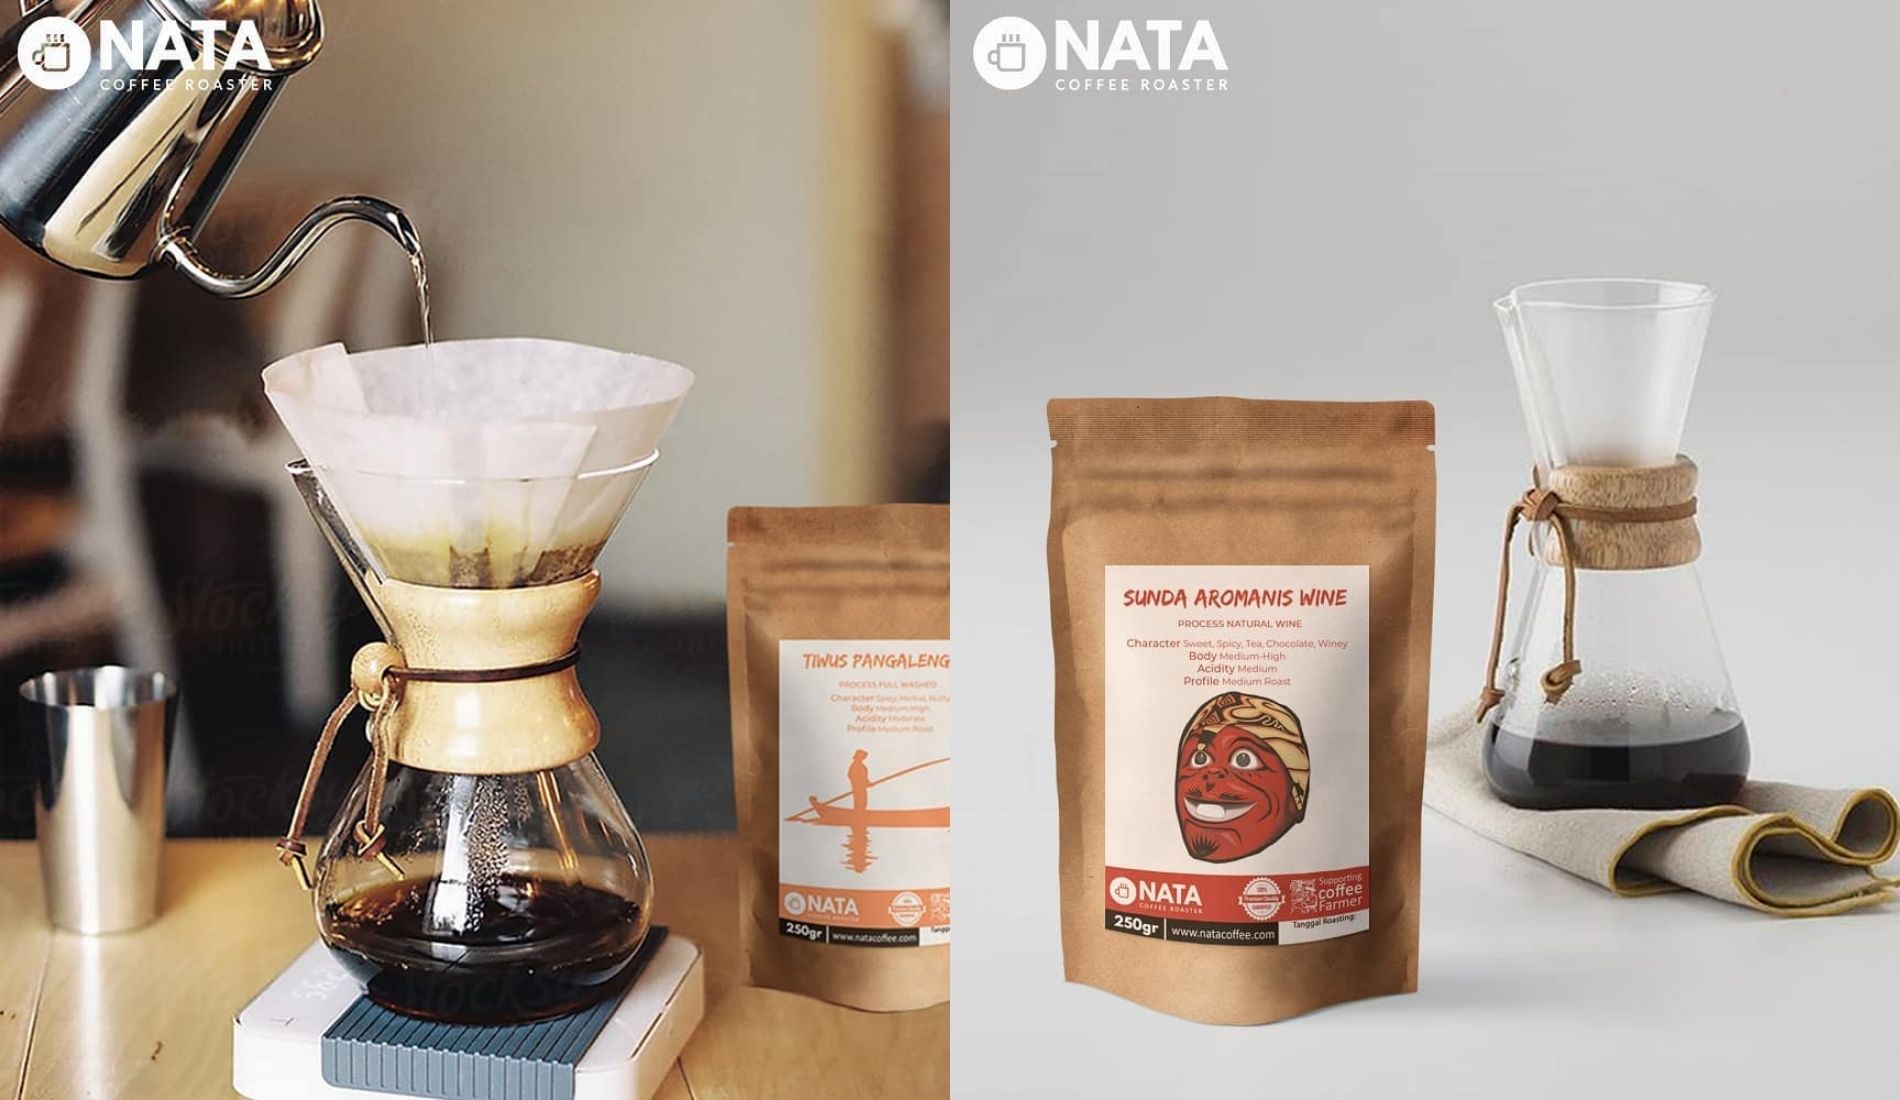 Produk Roated Coffee Nata Coffee - Image: Instagram Nata Coffee